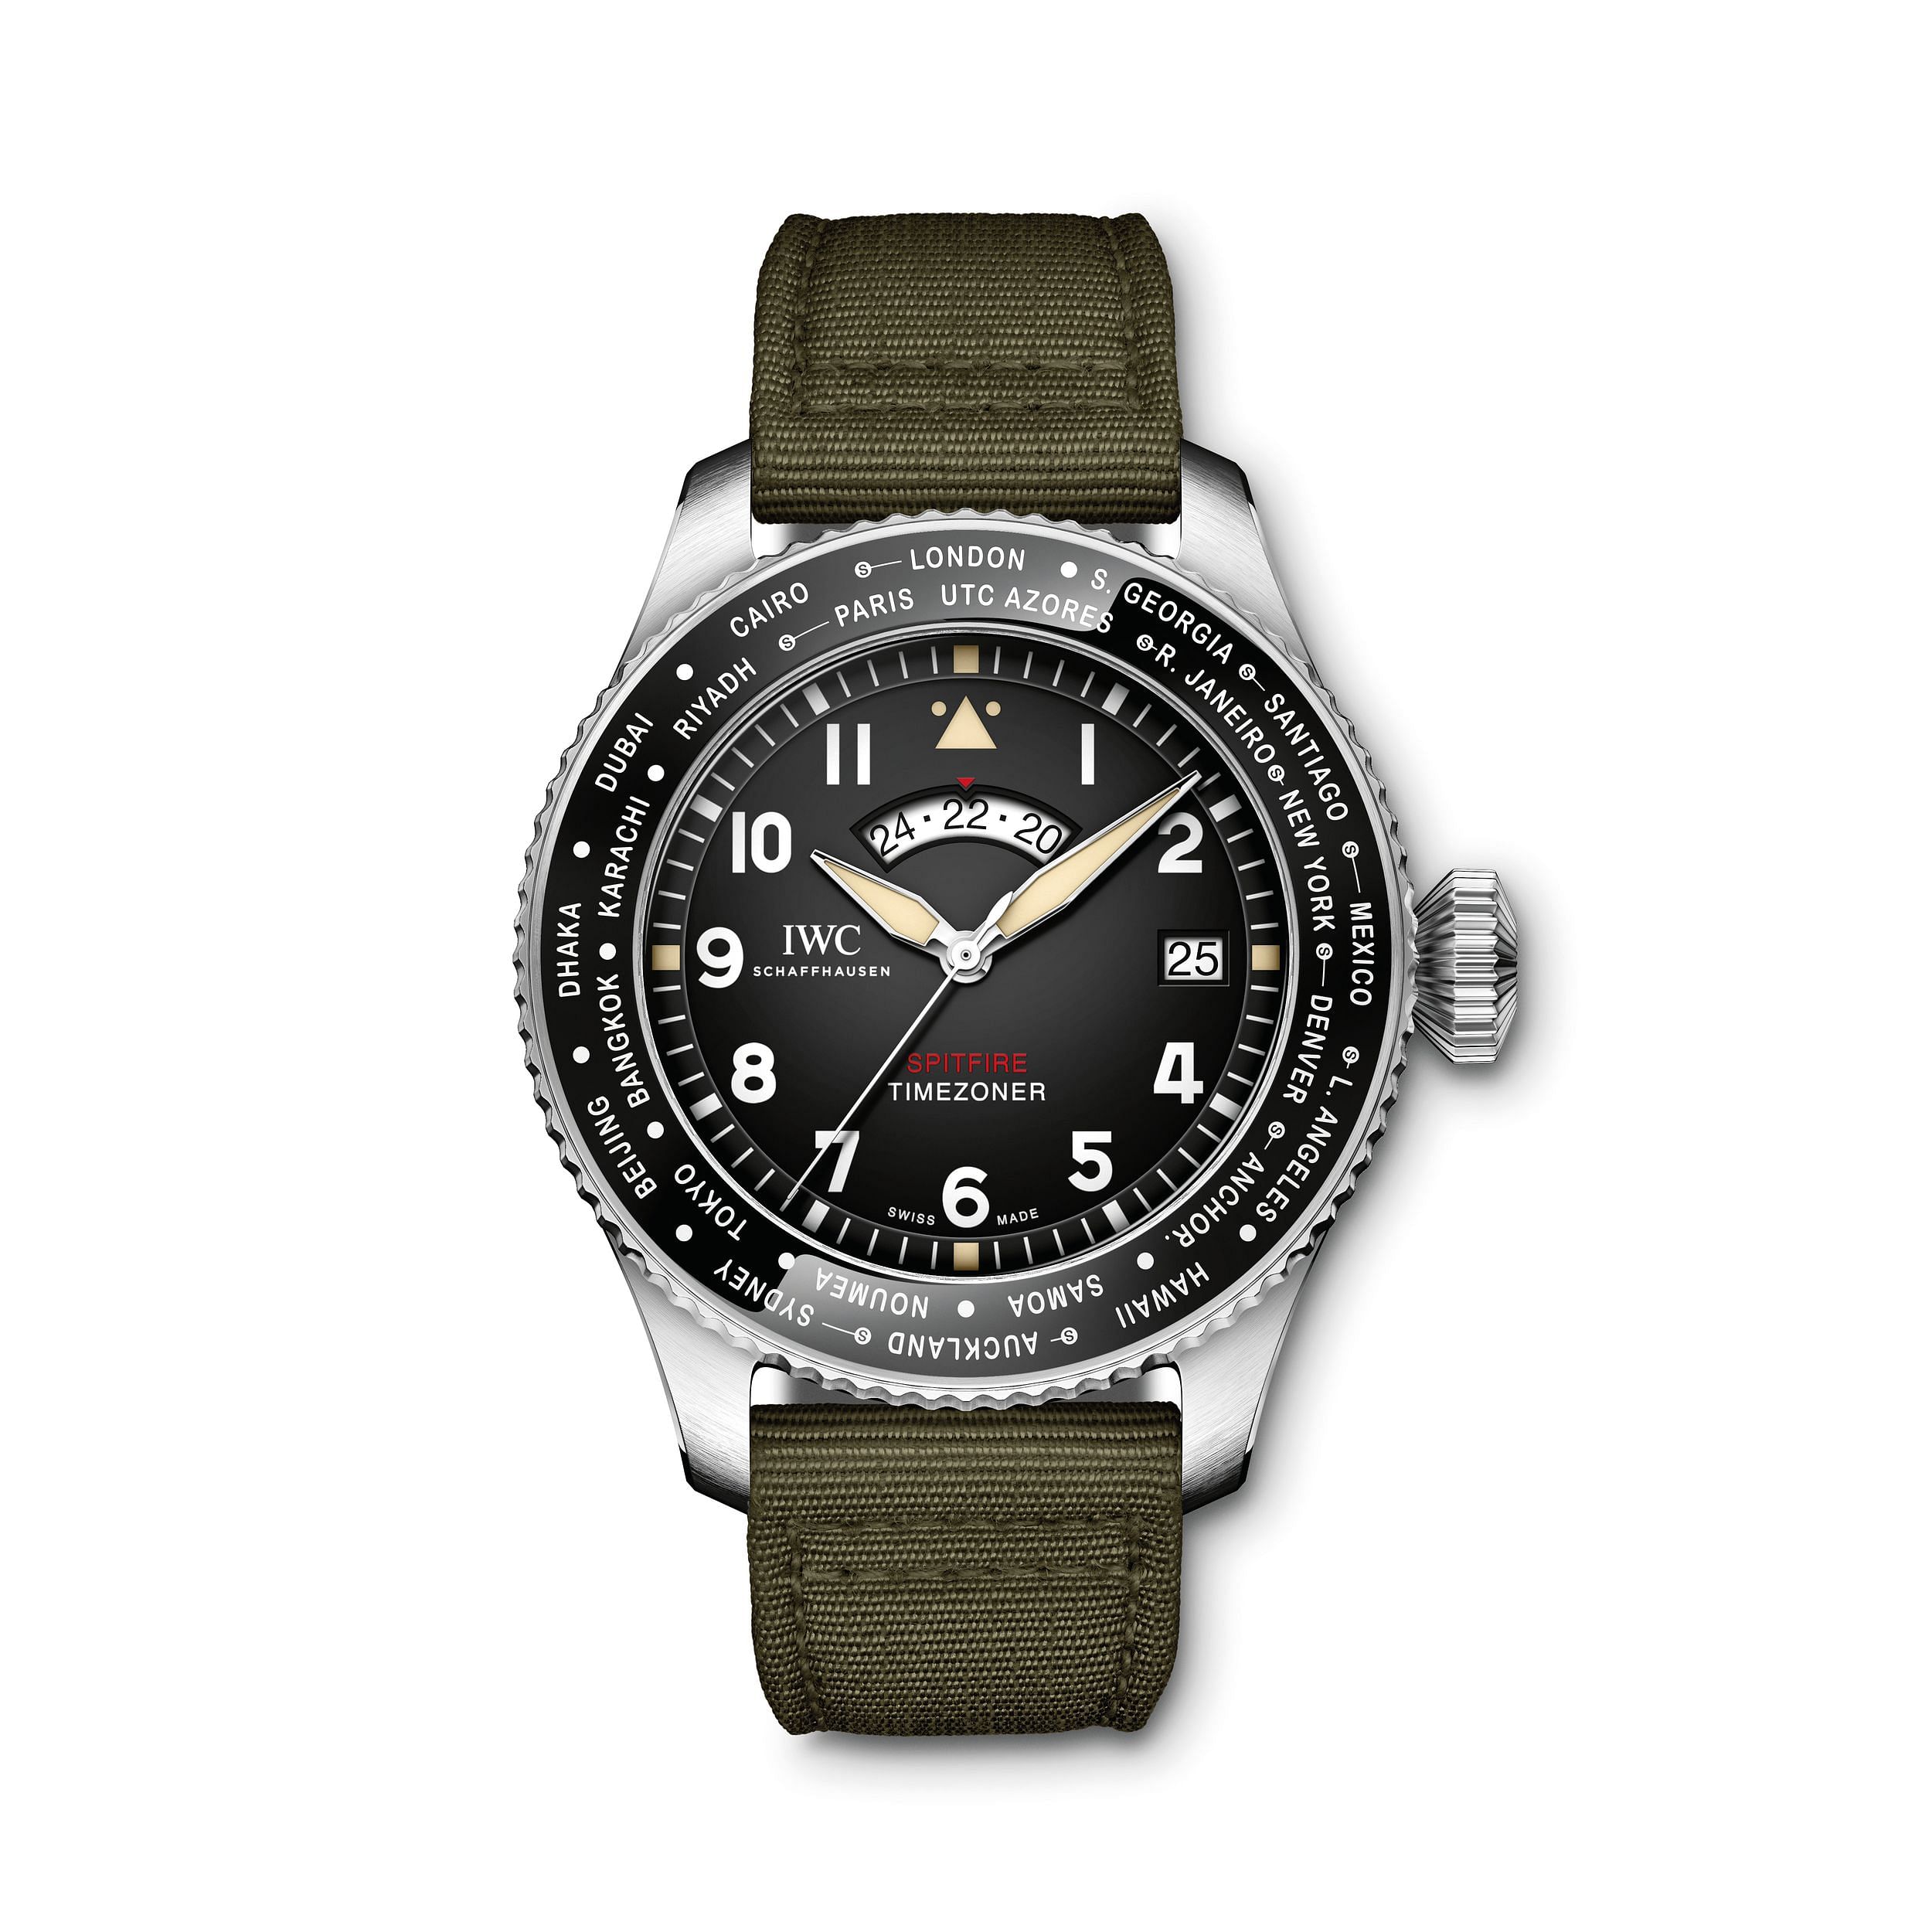 Pilot's Watch Timezoner Spitfire Edition The Longest Flight